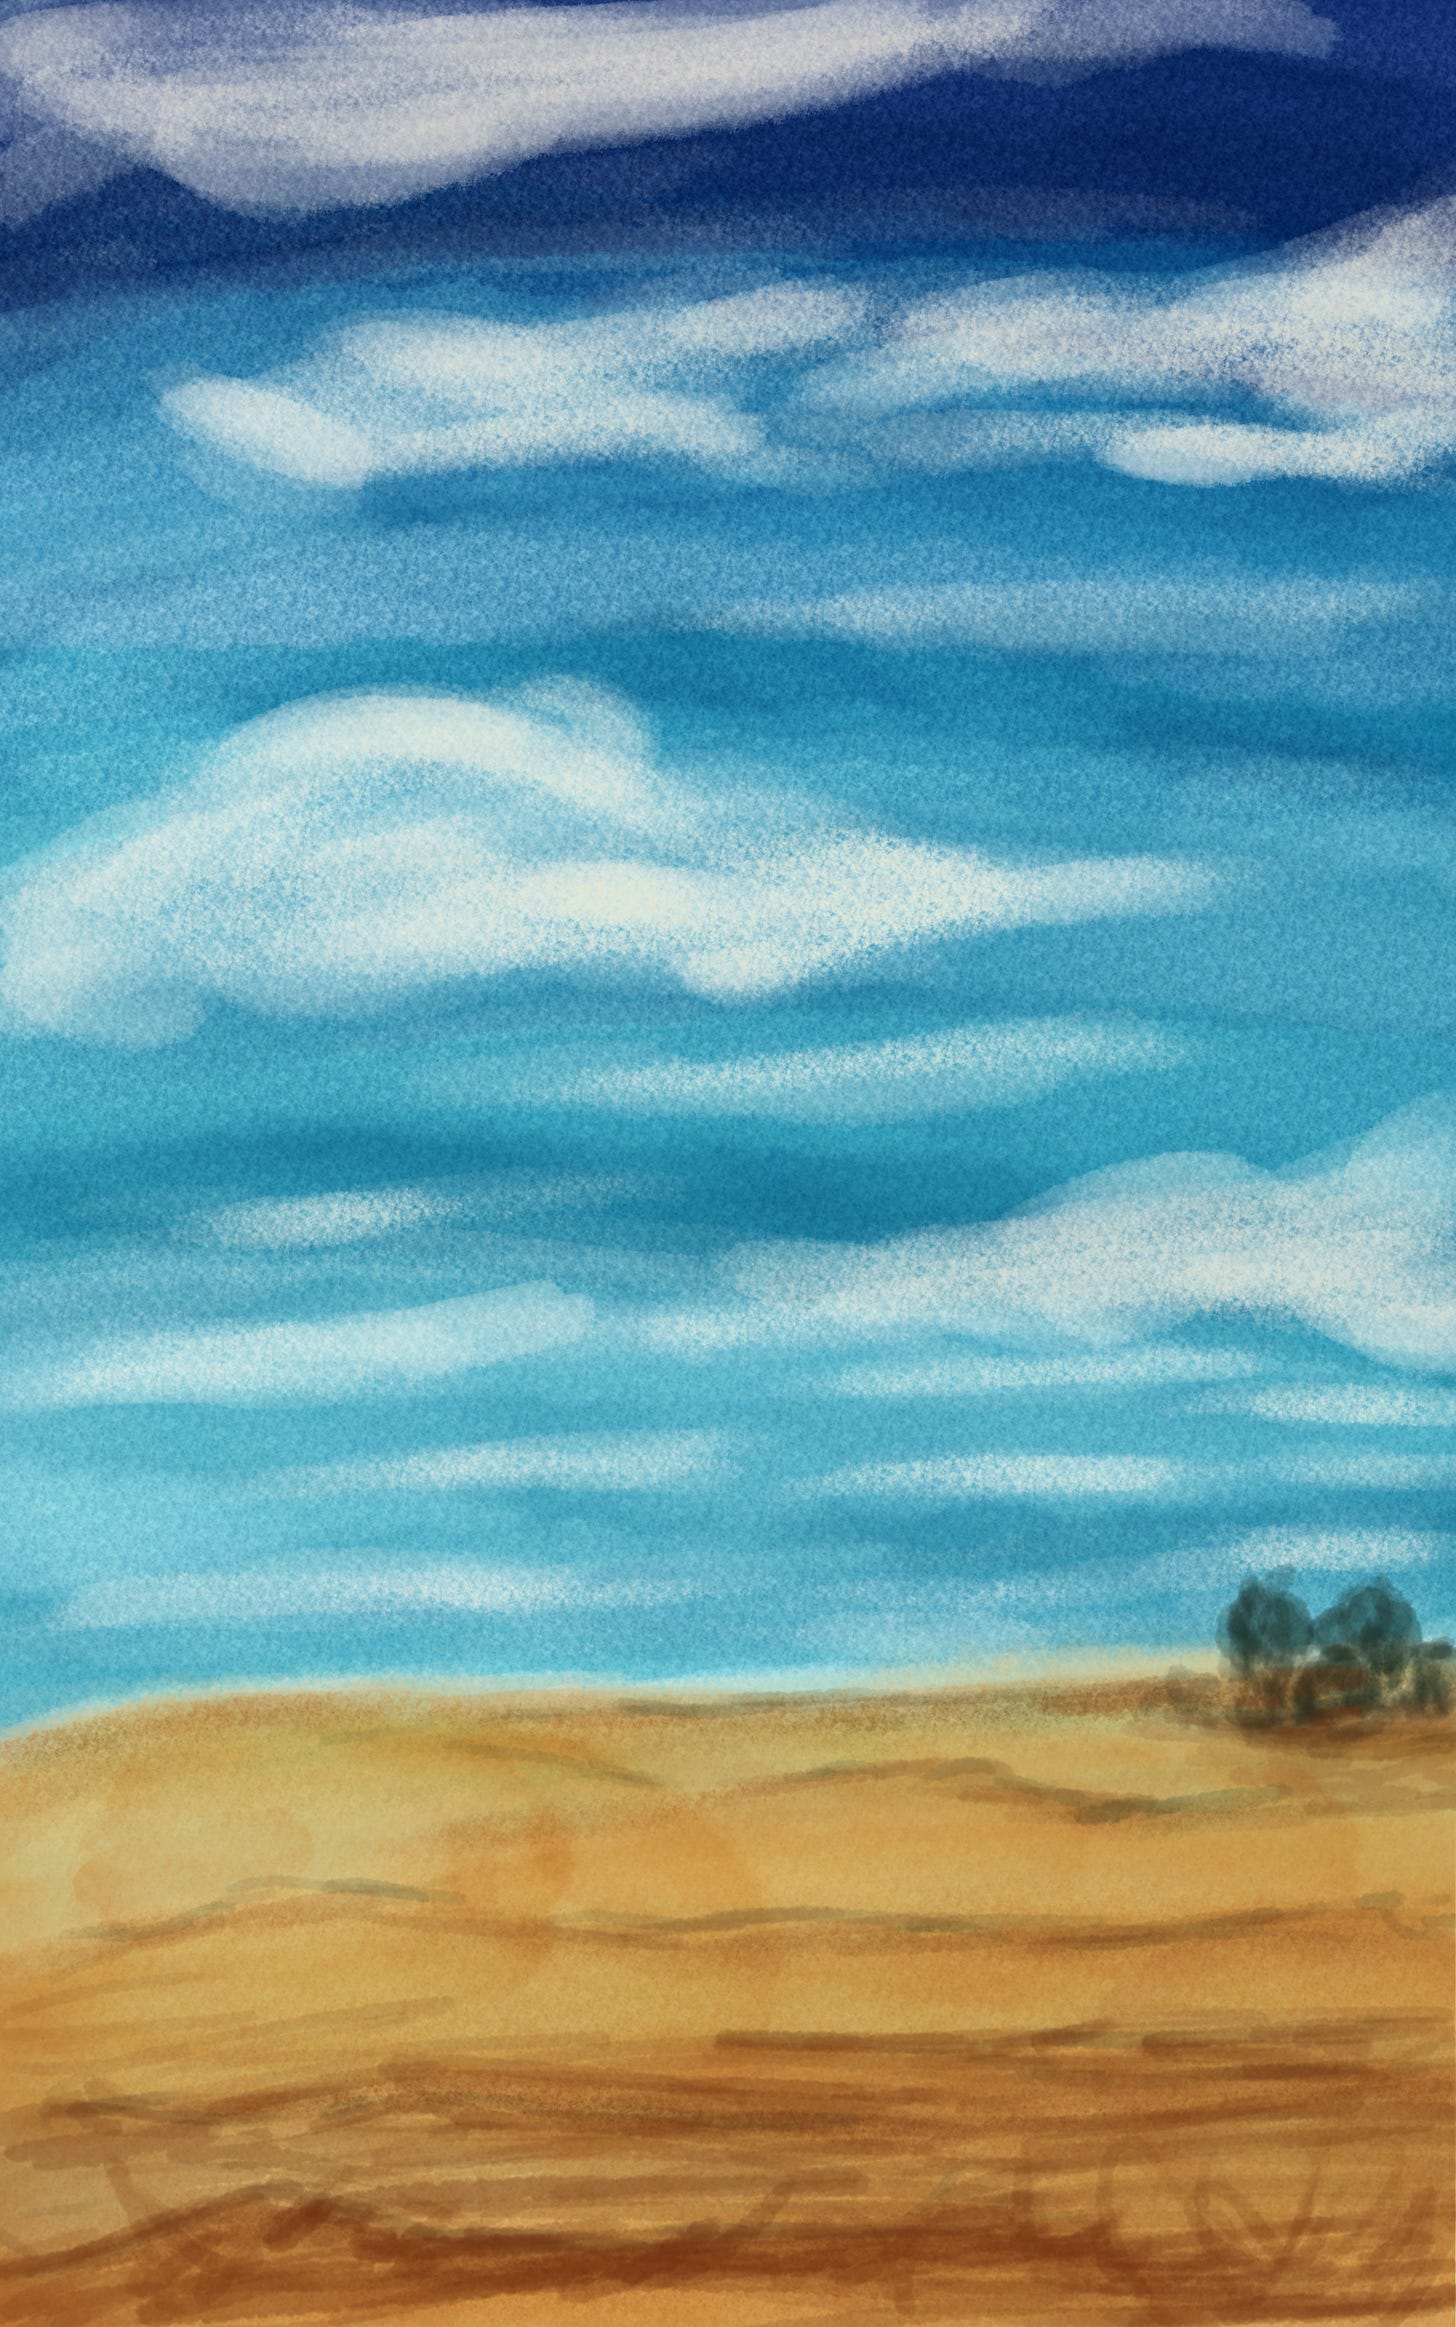 Prairie sky and field